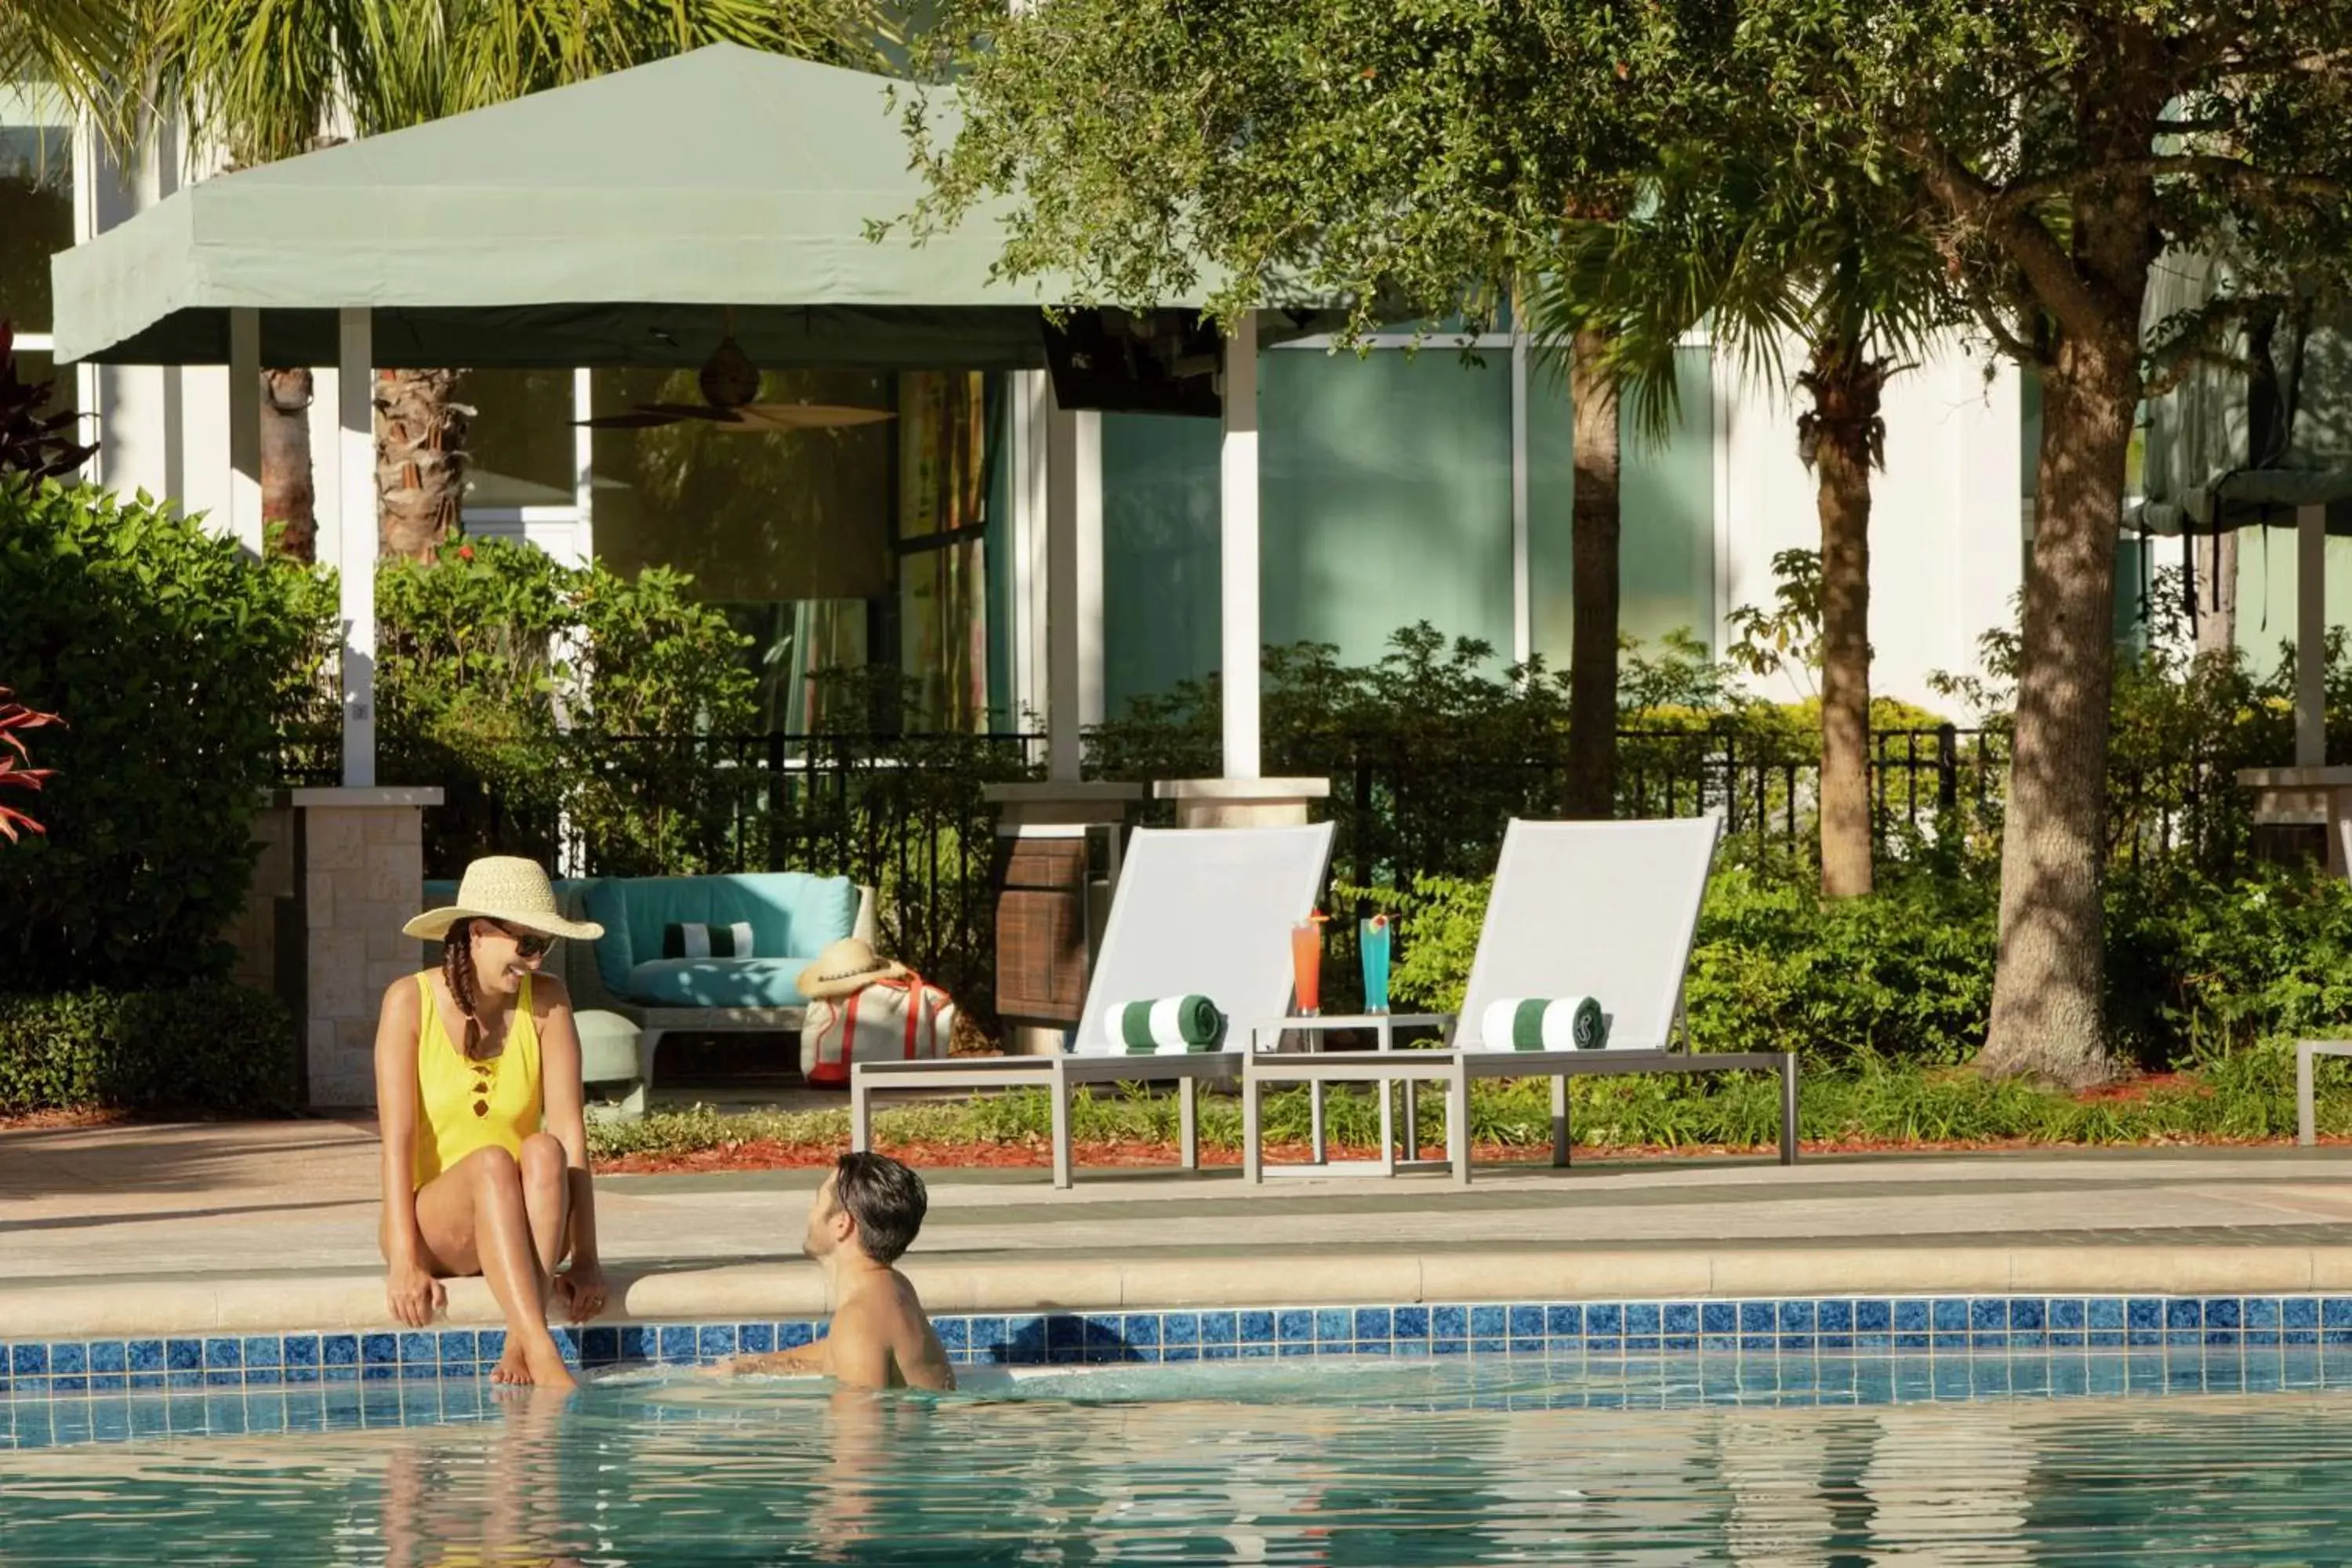 Pool view, Swimming Pool in Hilton Orlando